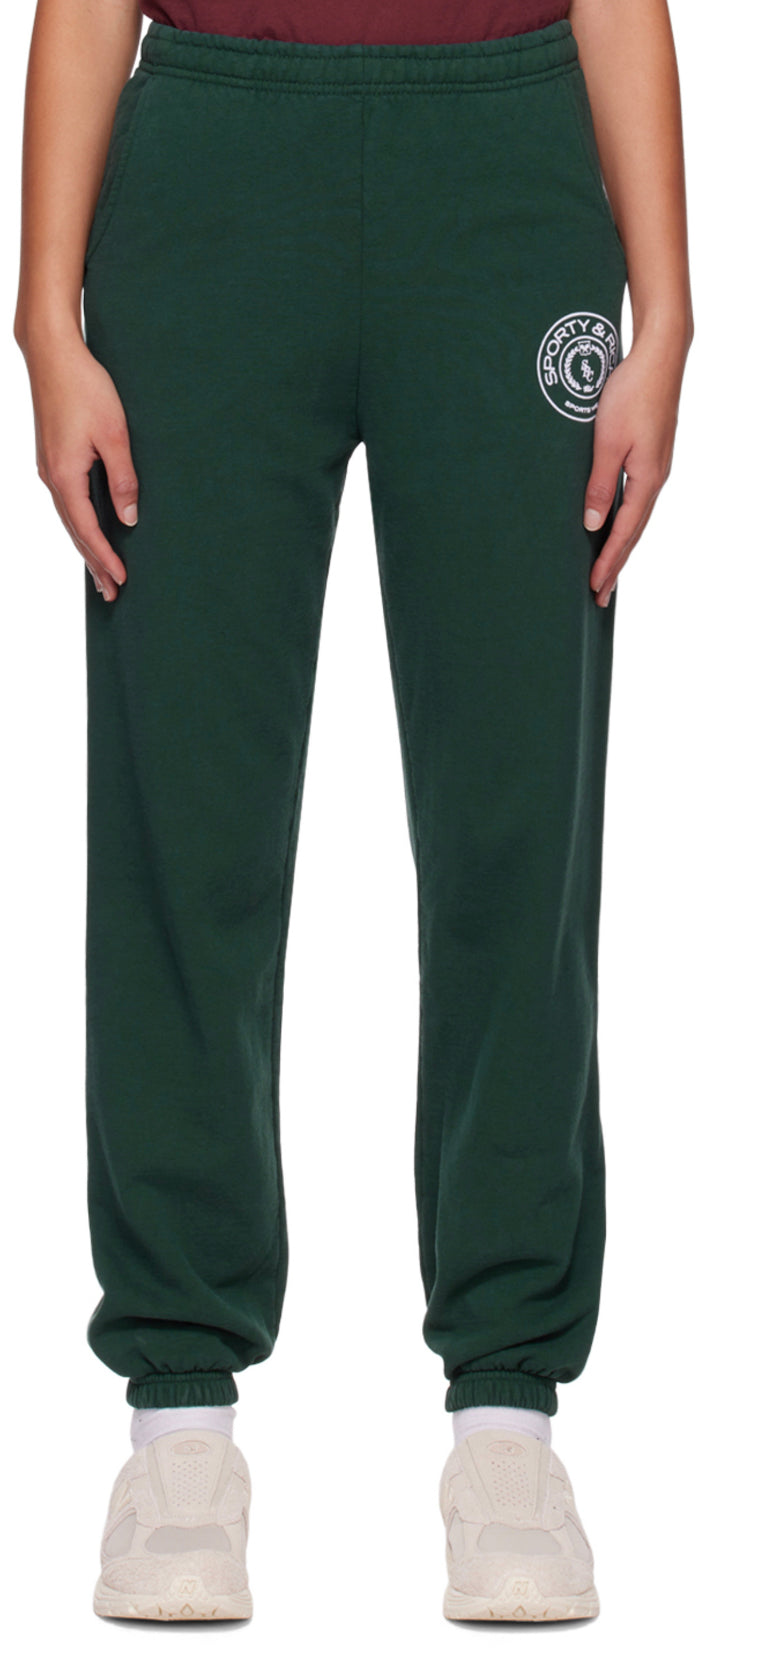 Green Crest Lounge Pants